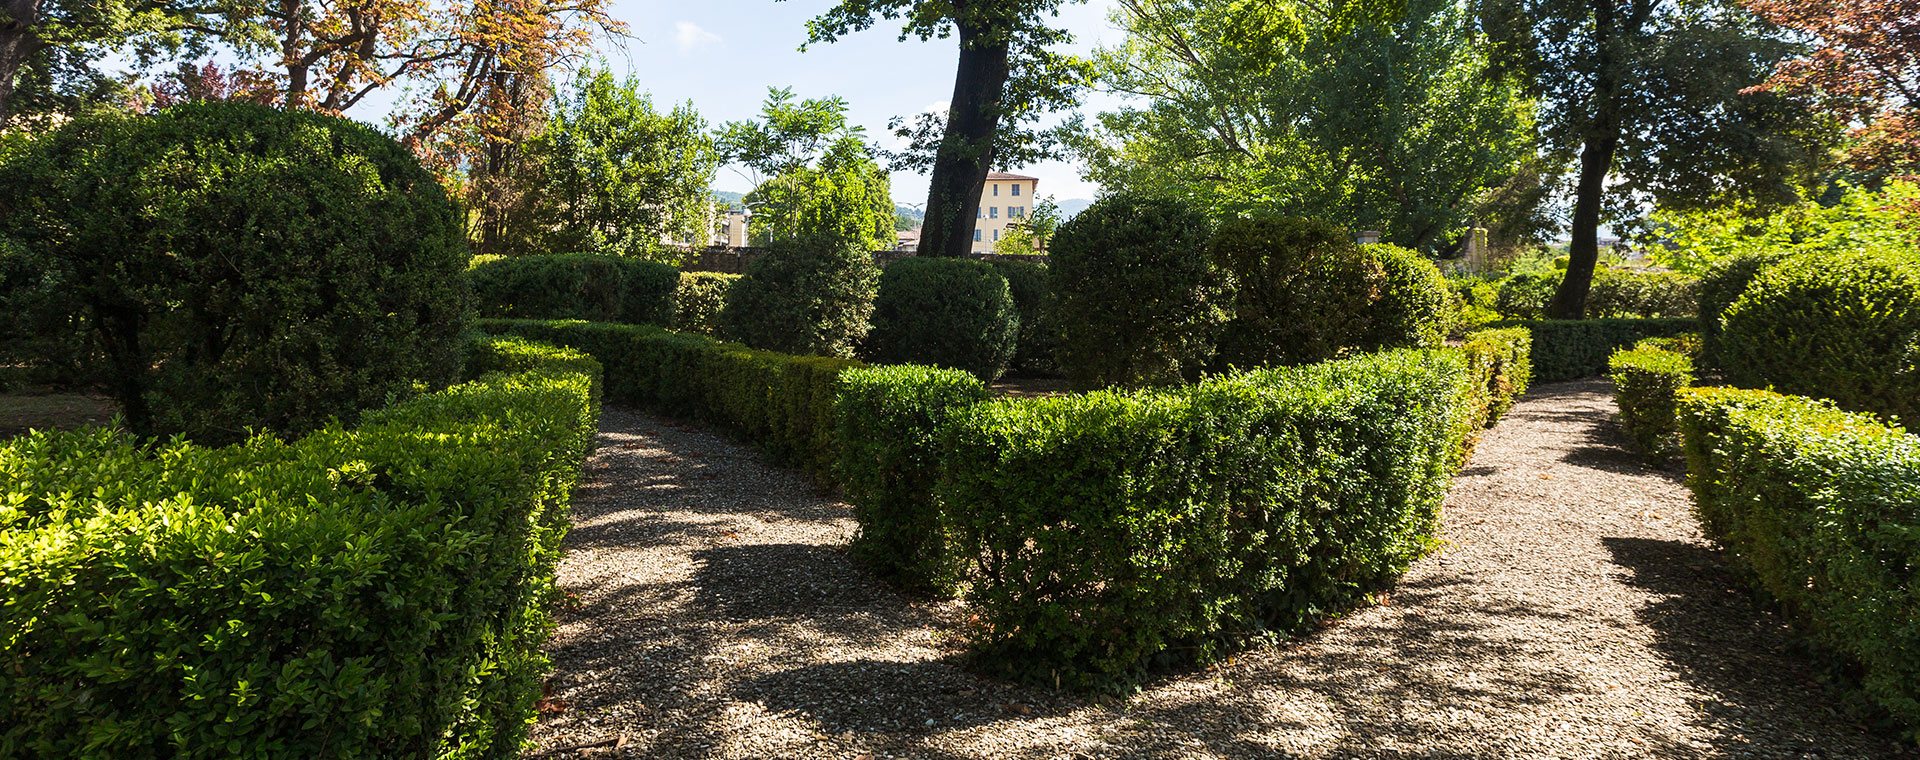 Villa with historical park for sale - a 8600 square feet italian garden